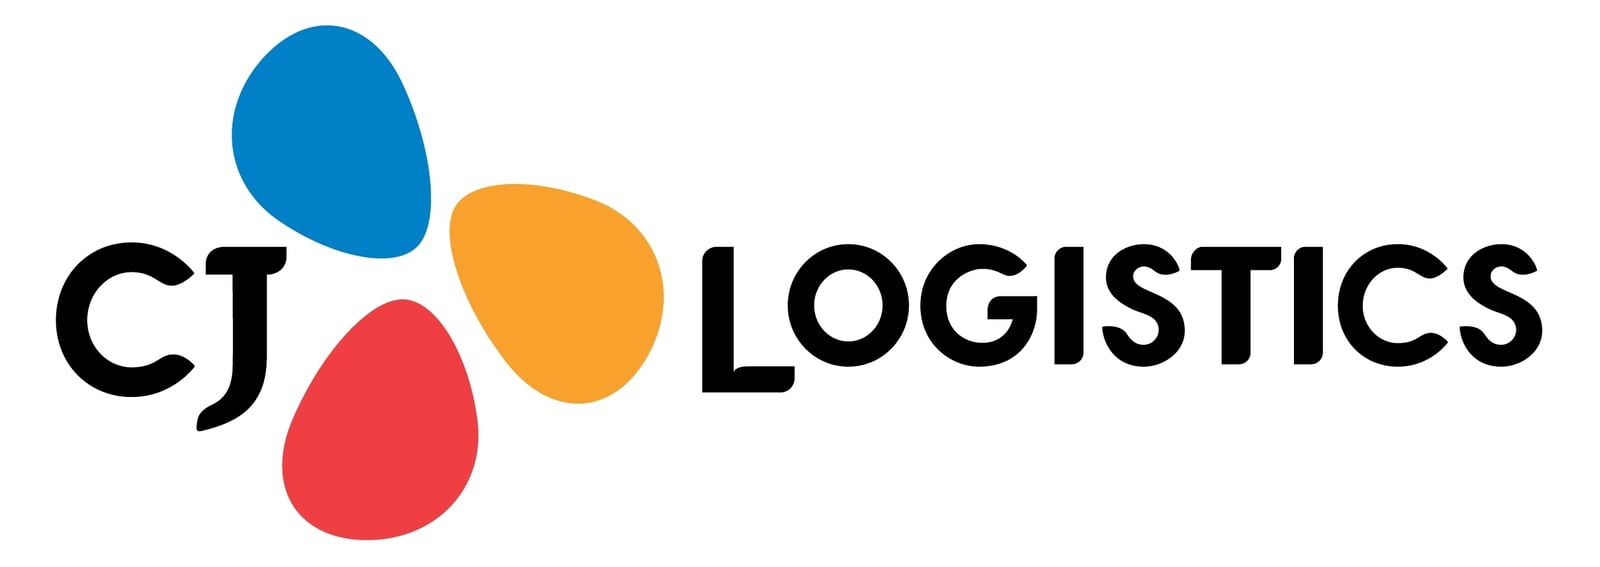 CJ_Logistics_logo